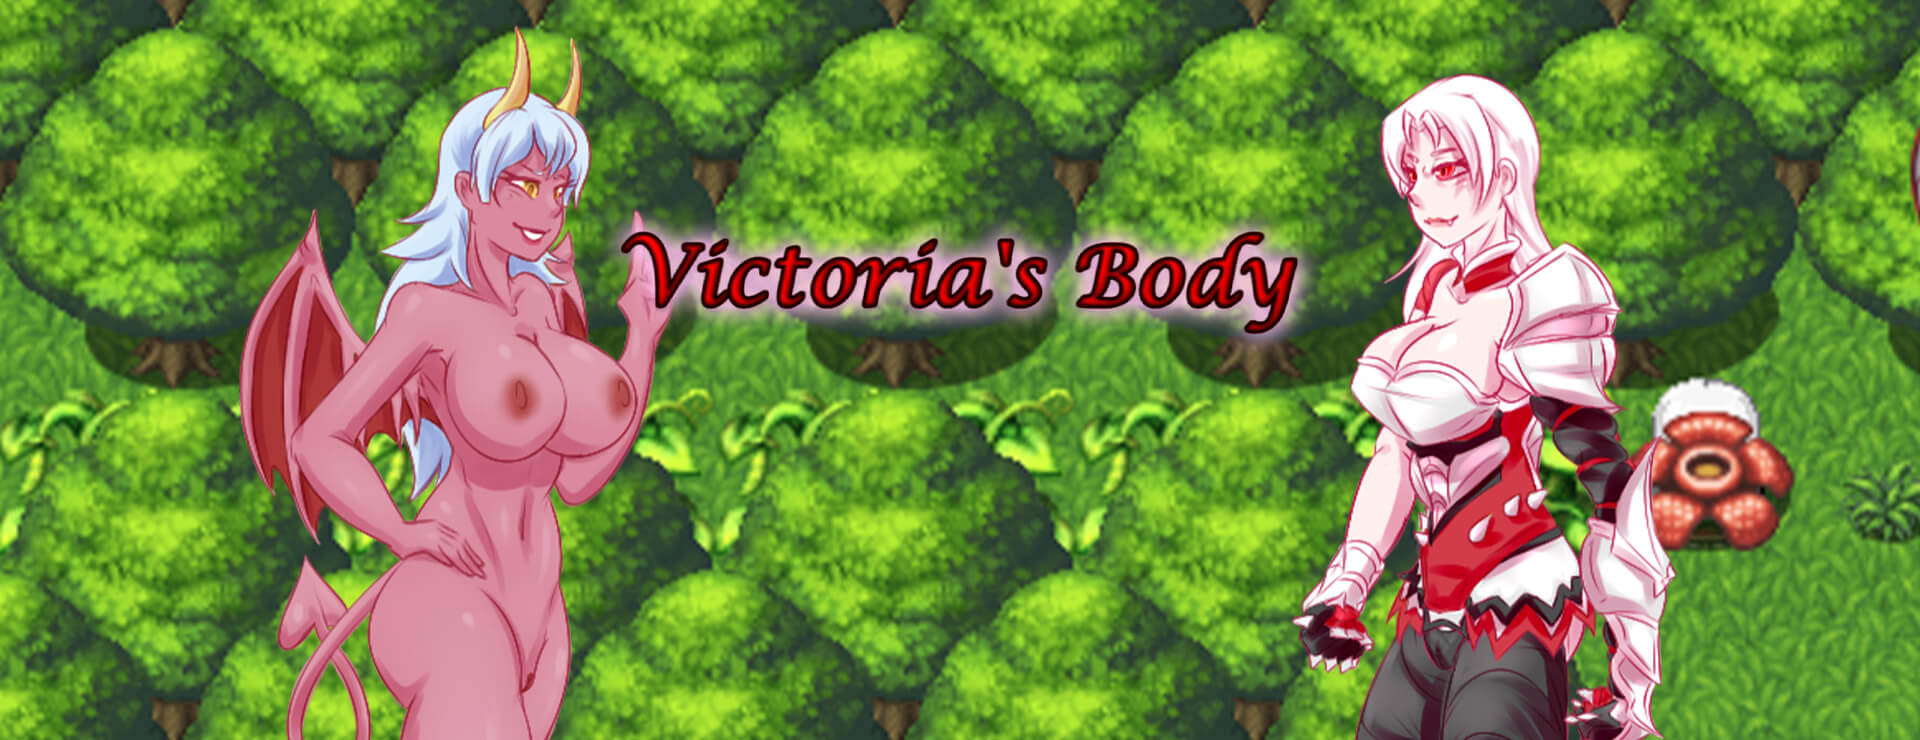 Victoria's Body - RPG Game